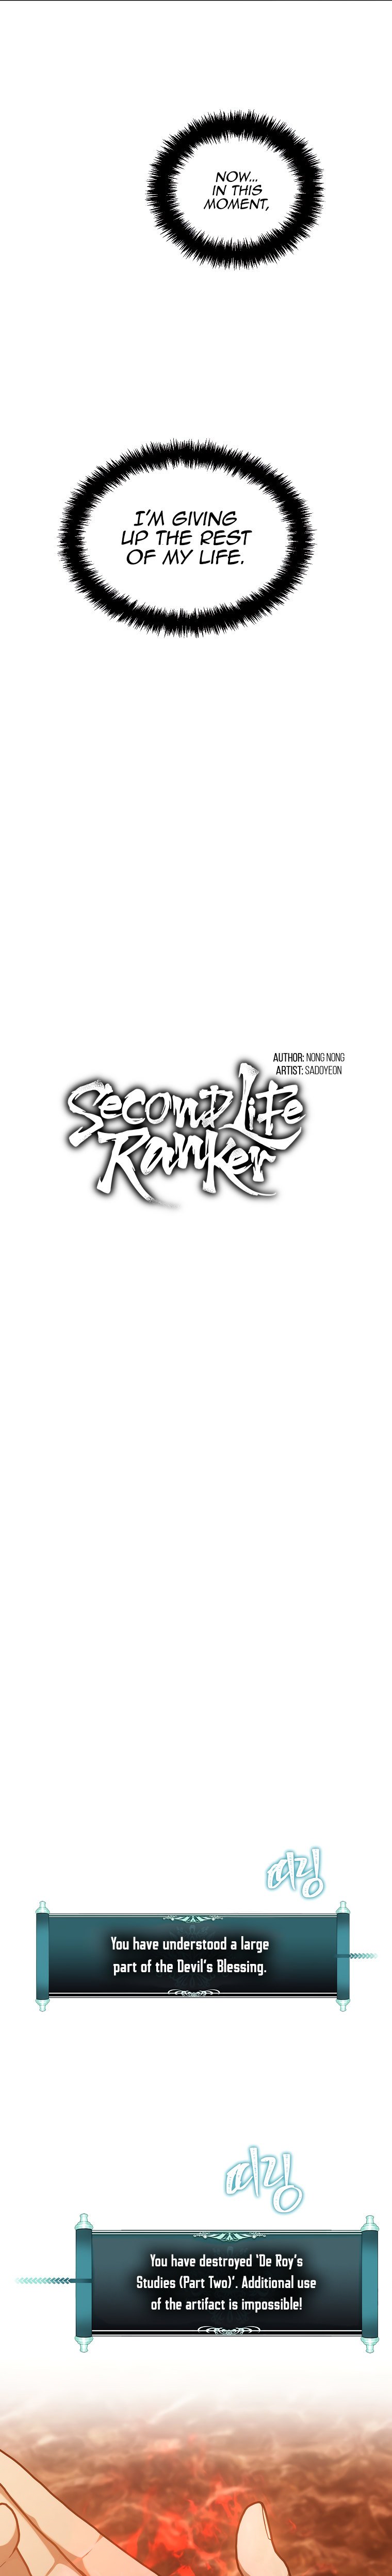 second-life-ranker-chap-137-16